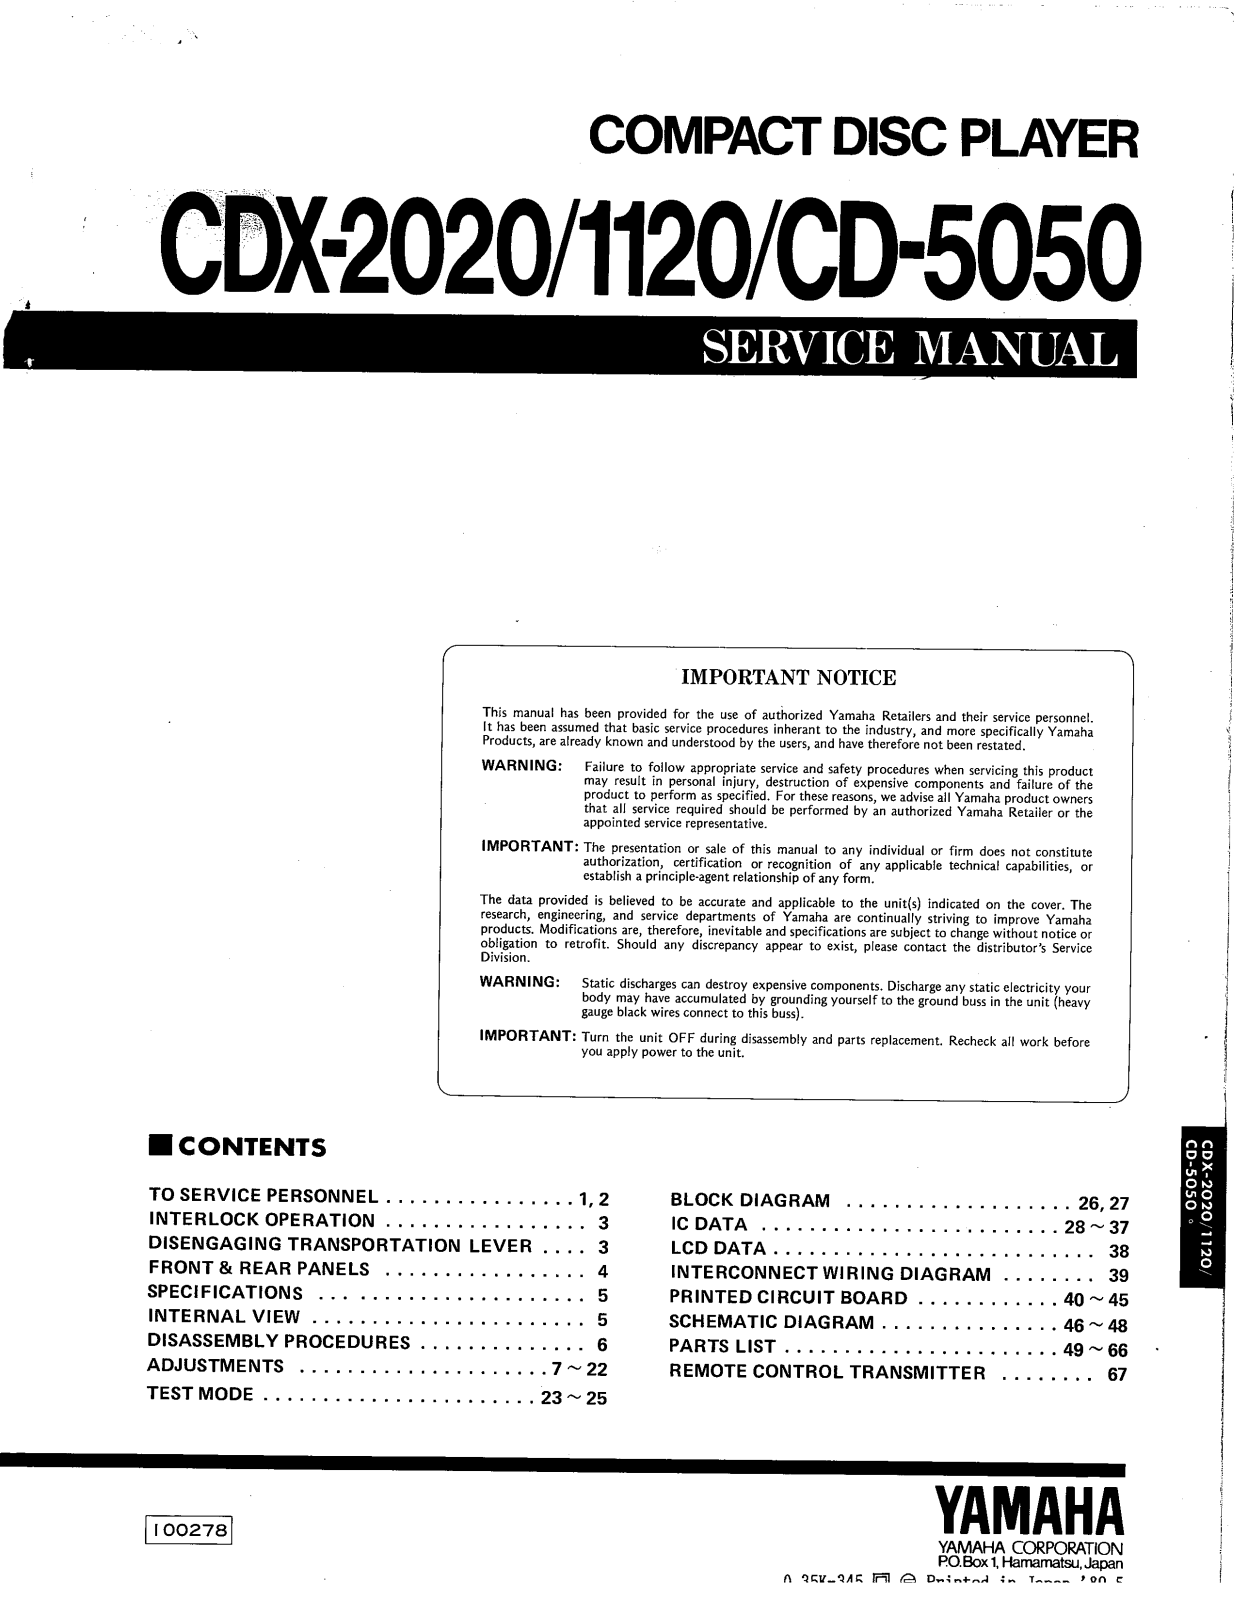 Yamaha CDX-1120 Service Manual